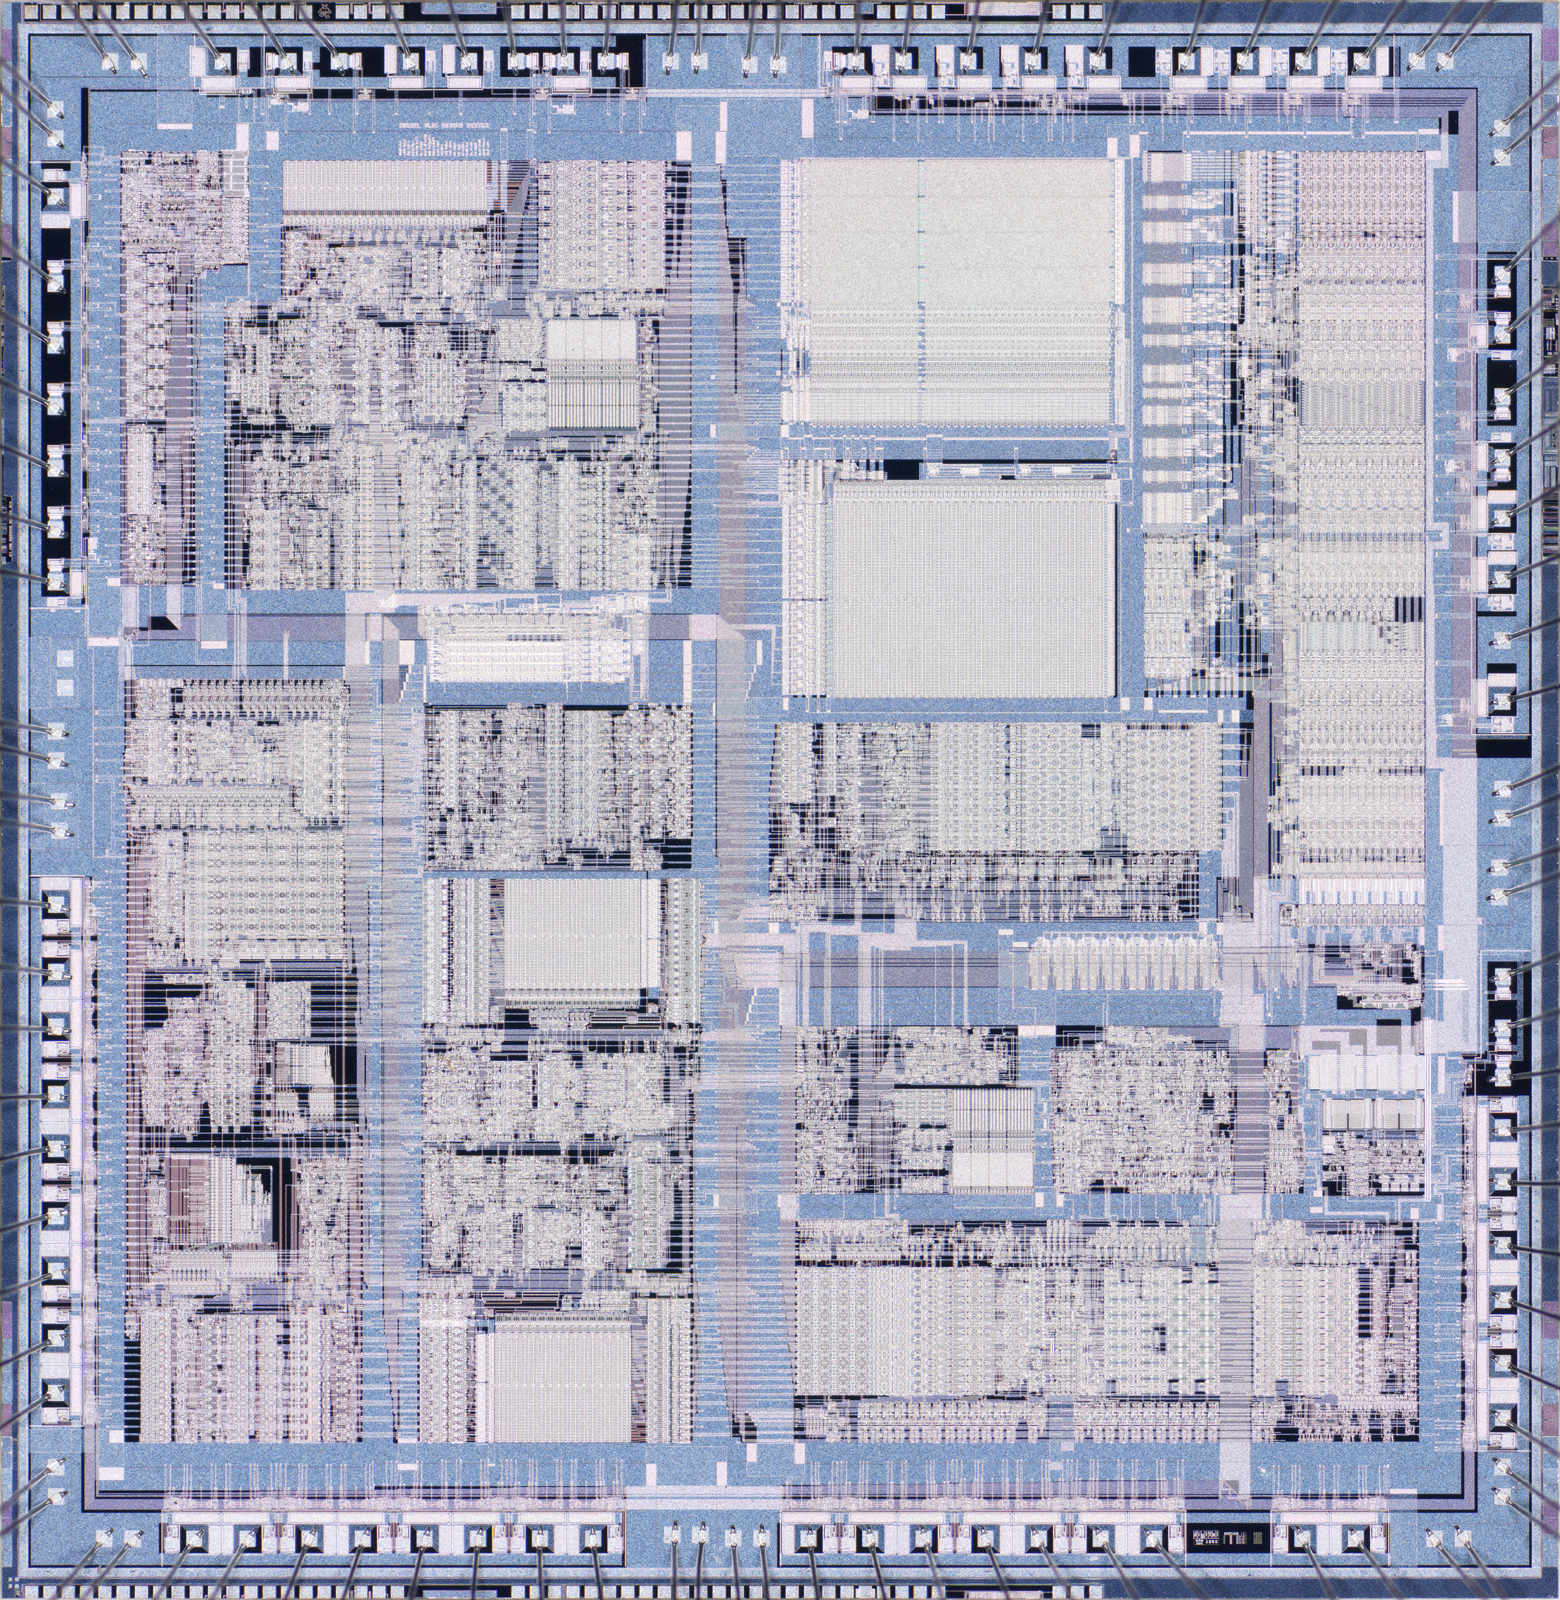 bercovici:dec:dc541g-sgec-second-generation-ethernet-controller-chip:mz.jpg